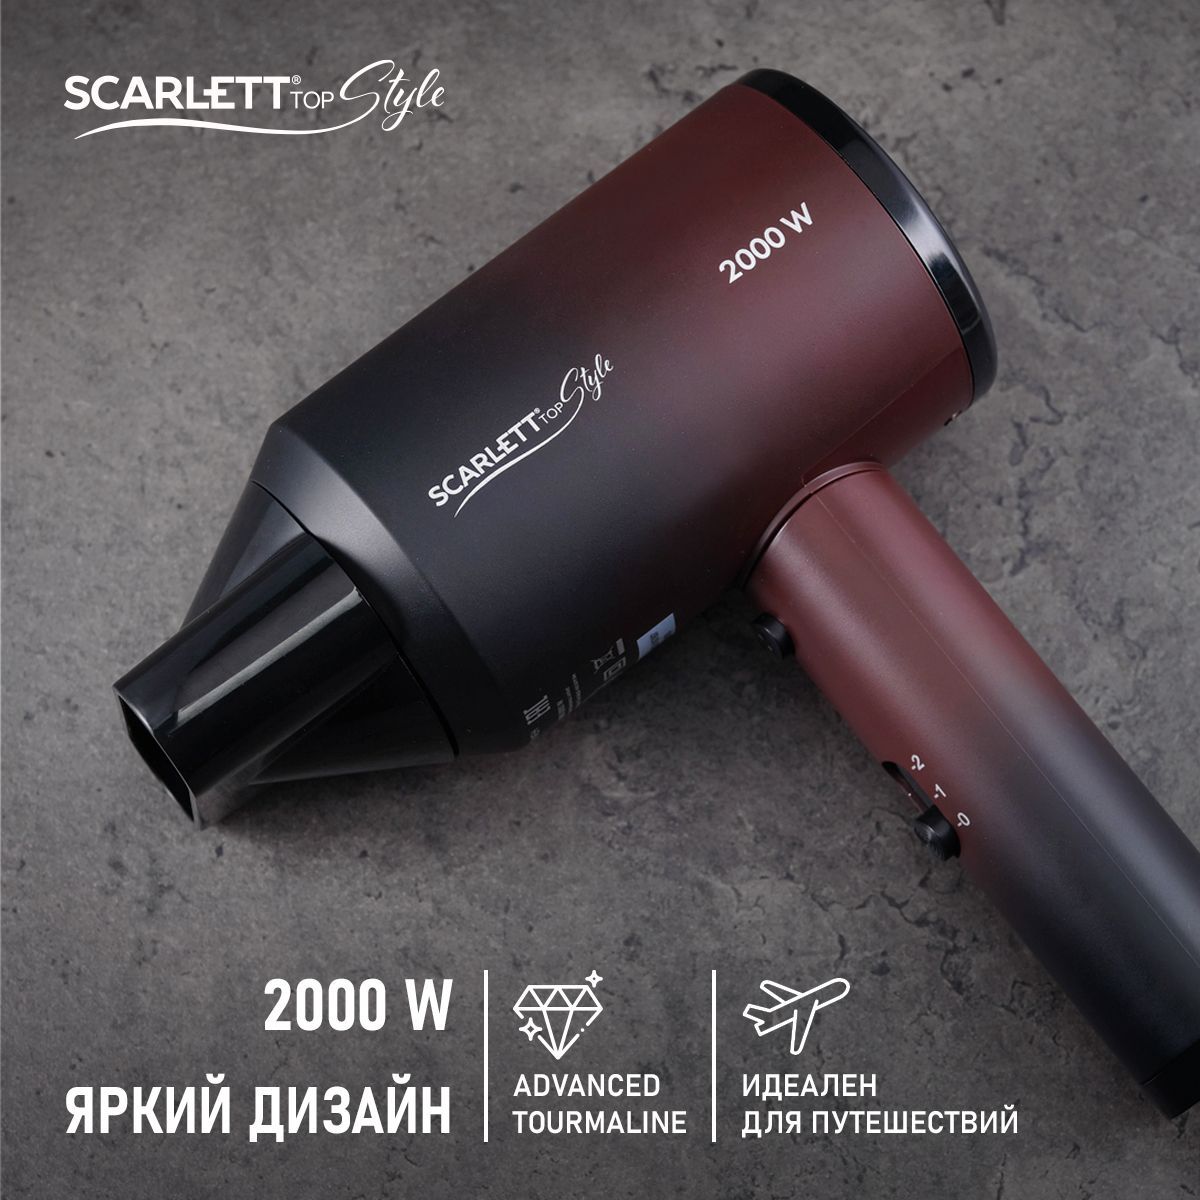 ScarlettФендляволосSC-HD70I38,2000Вт,ионизация2000Вт,скоростей2,кол-вонасадок1,бордовый